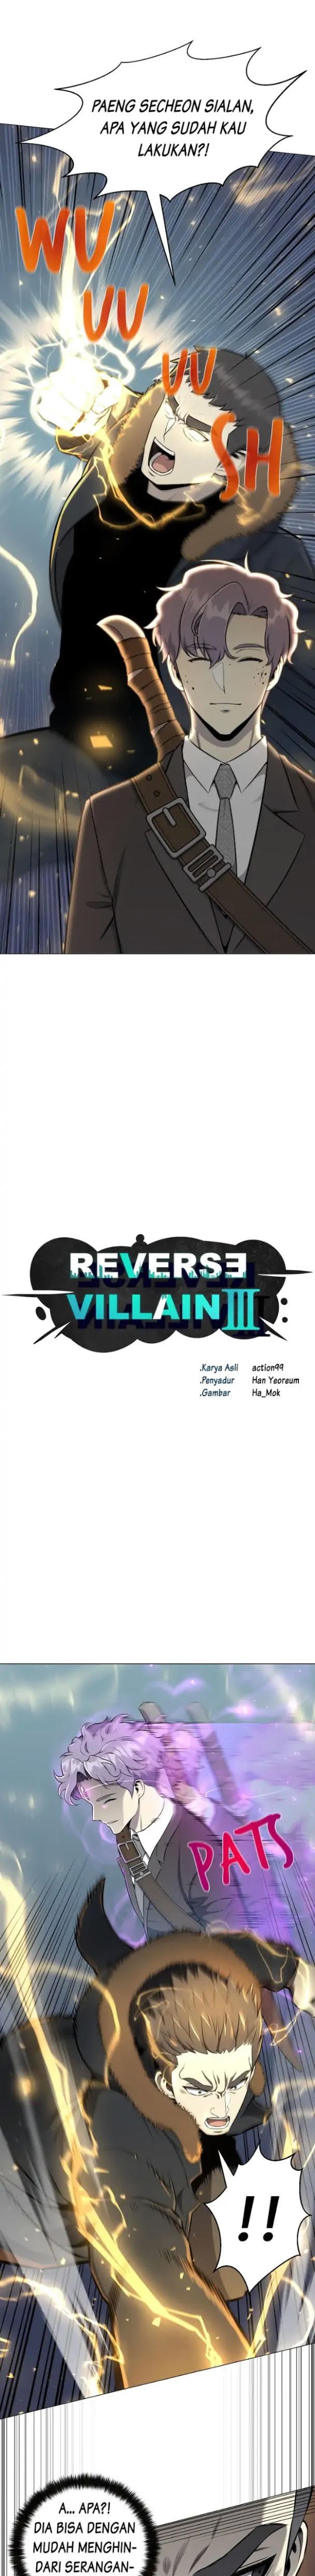 Reverse Villain Id Chapter 85 - 91